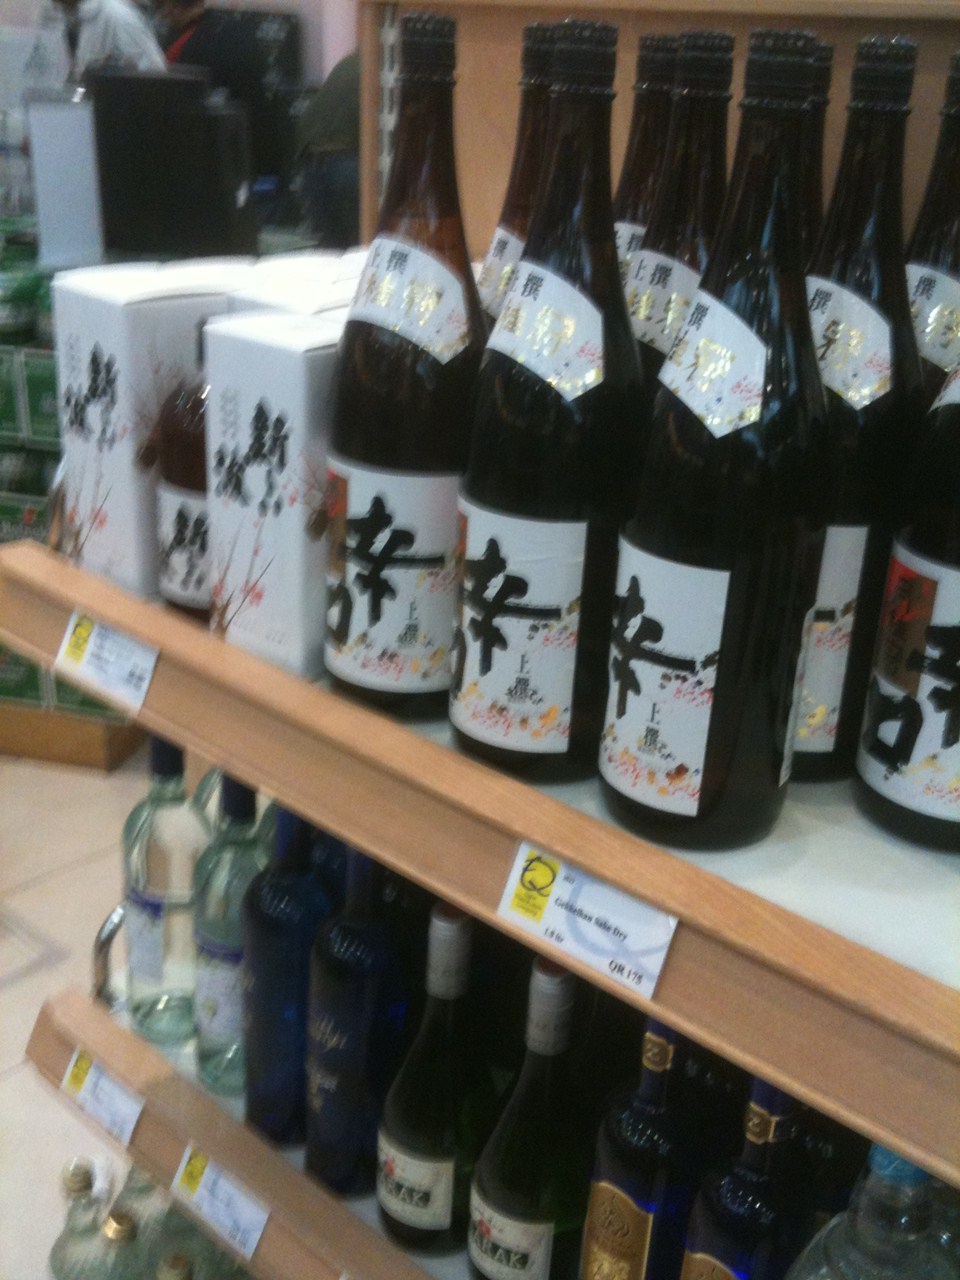 http://www.shintoko.jp/engblog/archives/images/2011/11/111122_liquorshop_0471.jpg